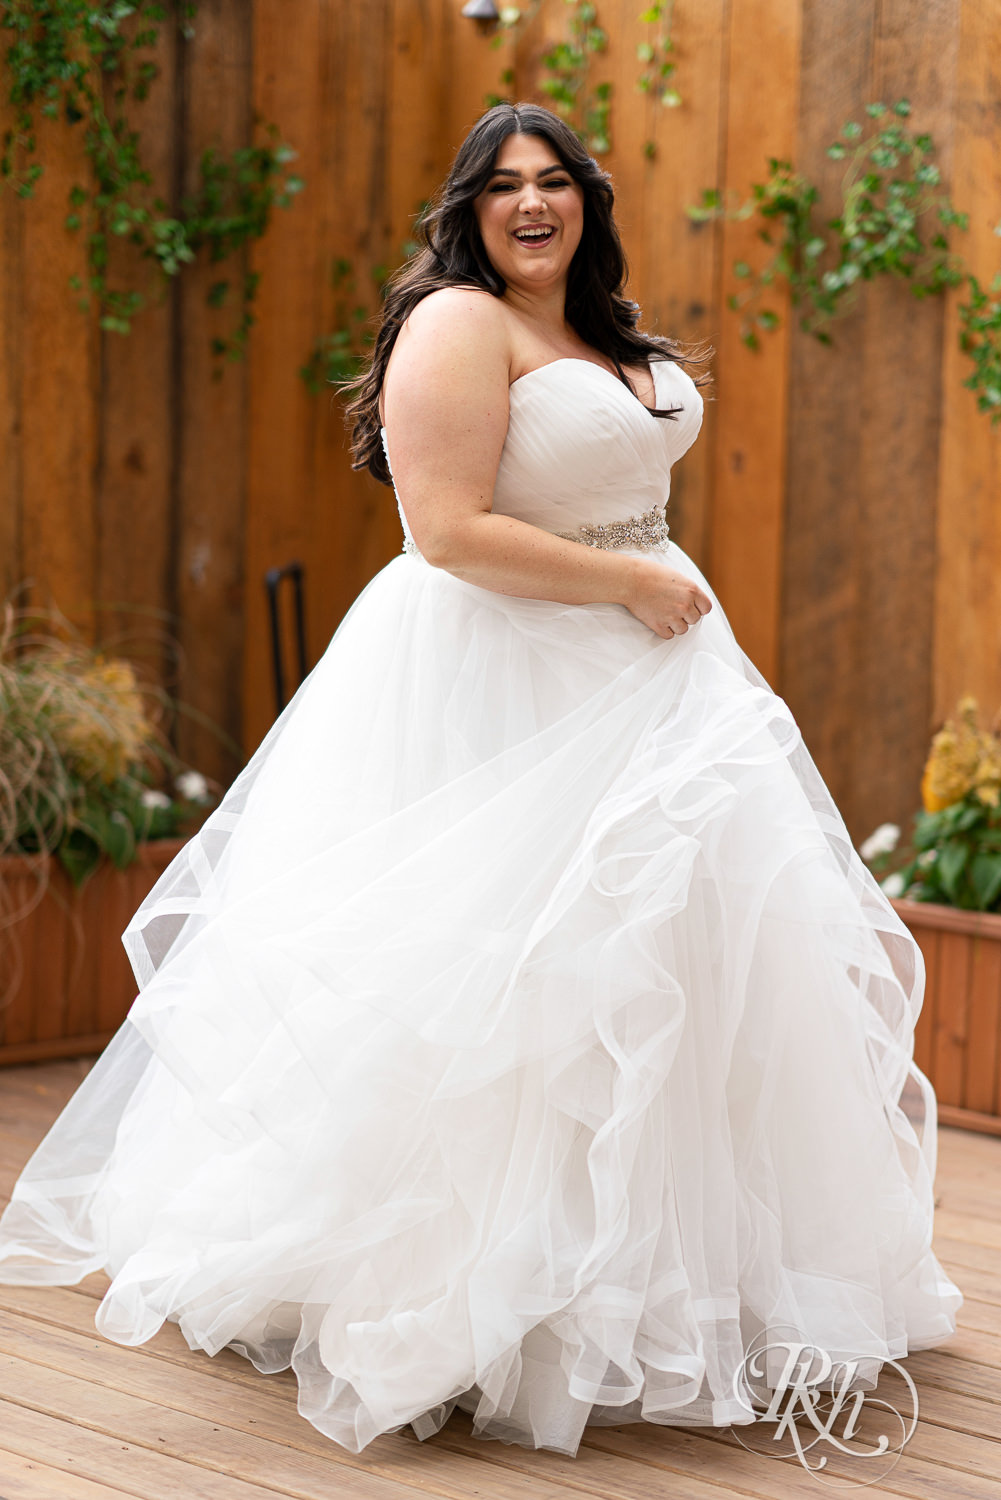 Plus size bride dancing in lacy wedding dress in Minneapolis, Minnesota.